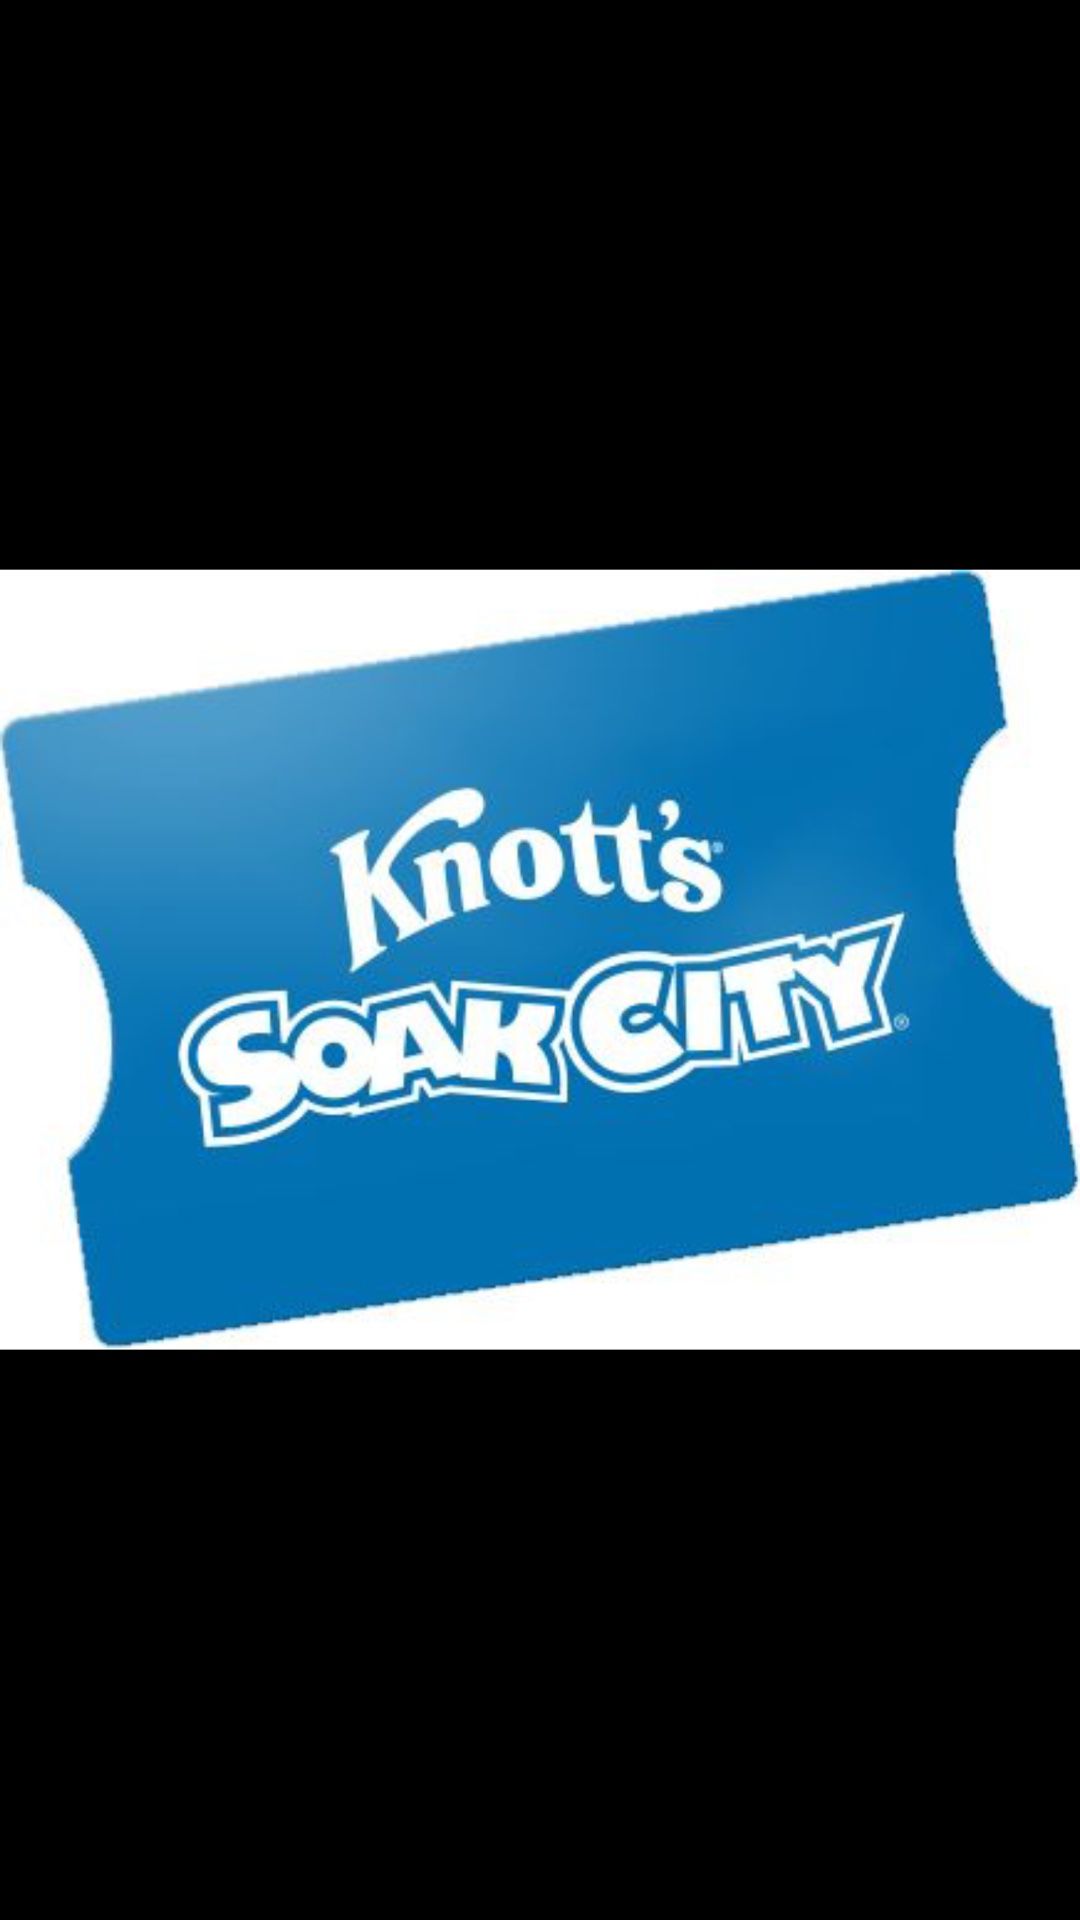 Knotts Soak City